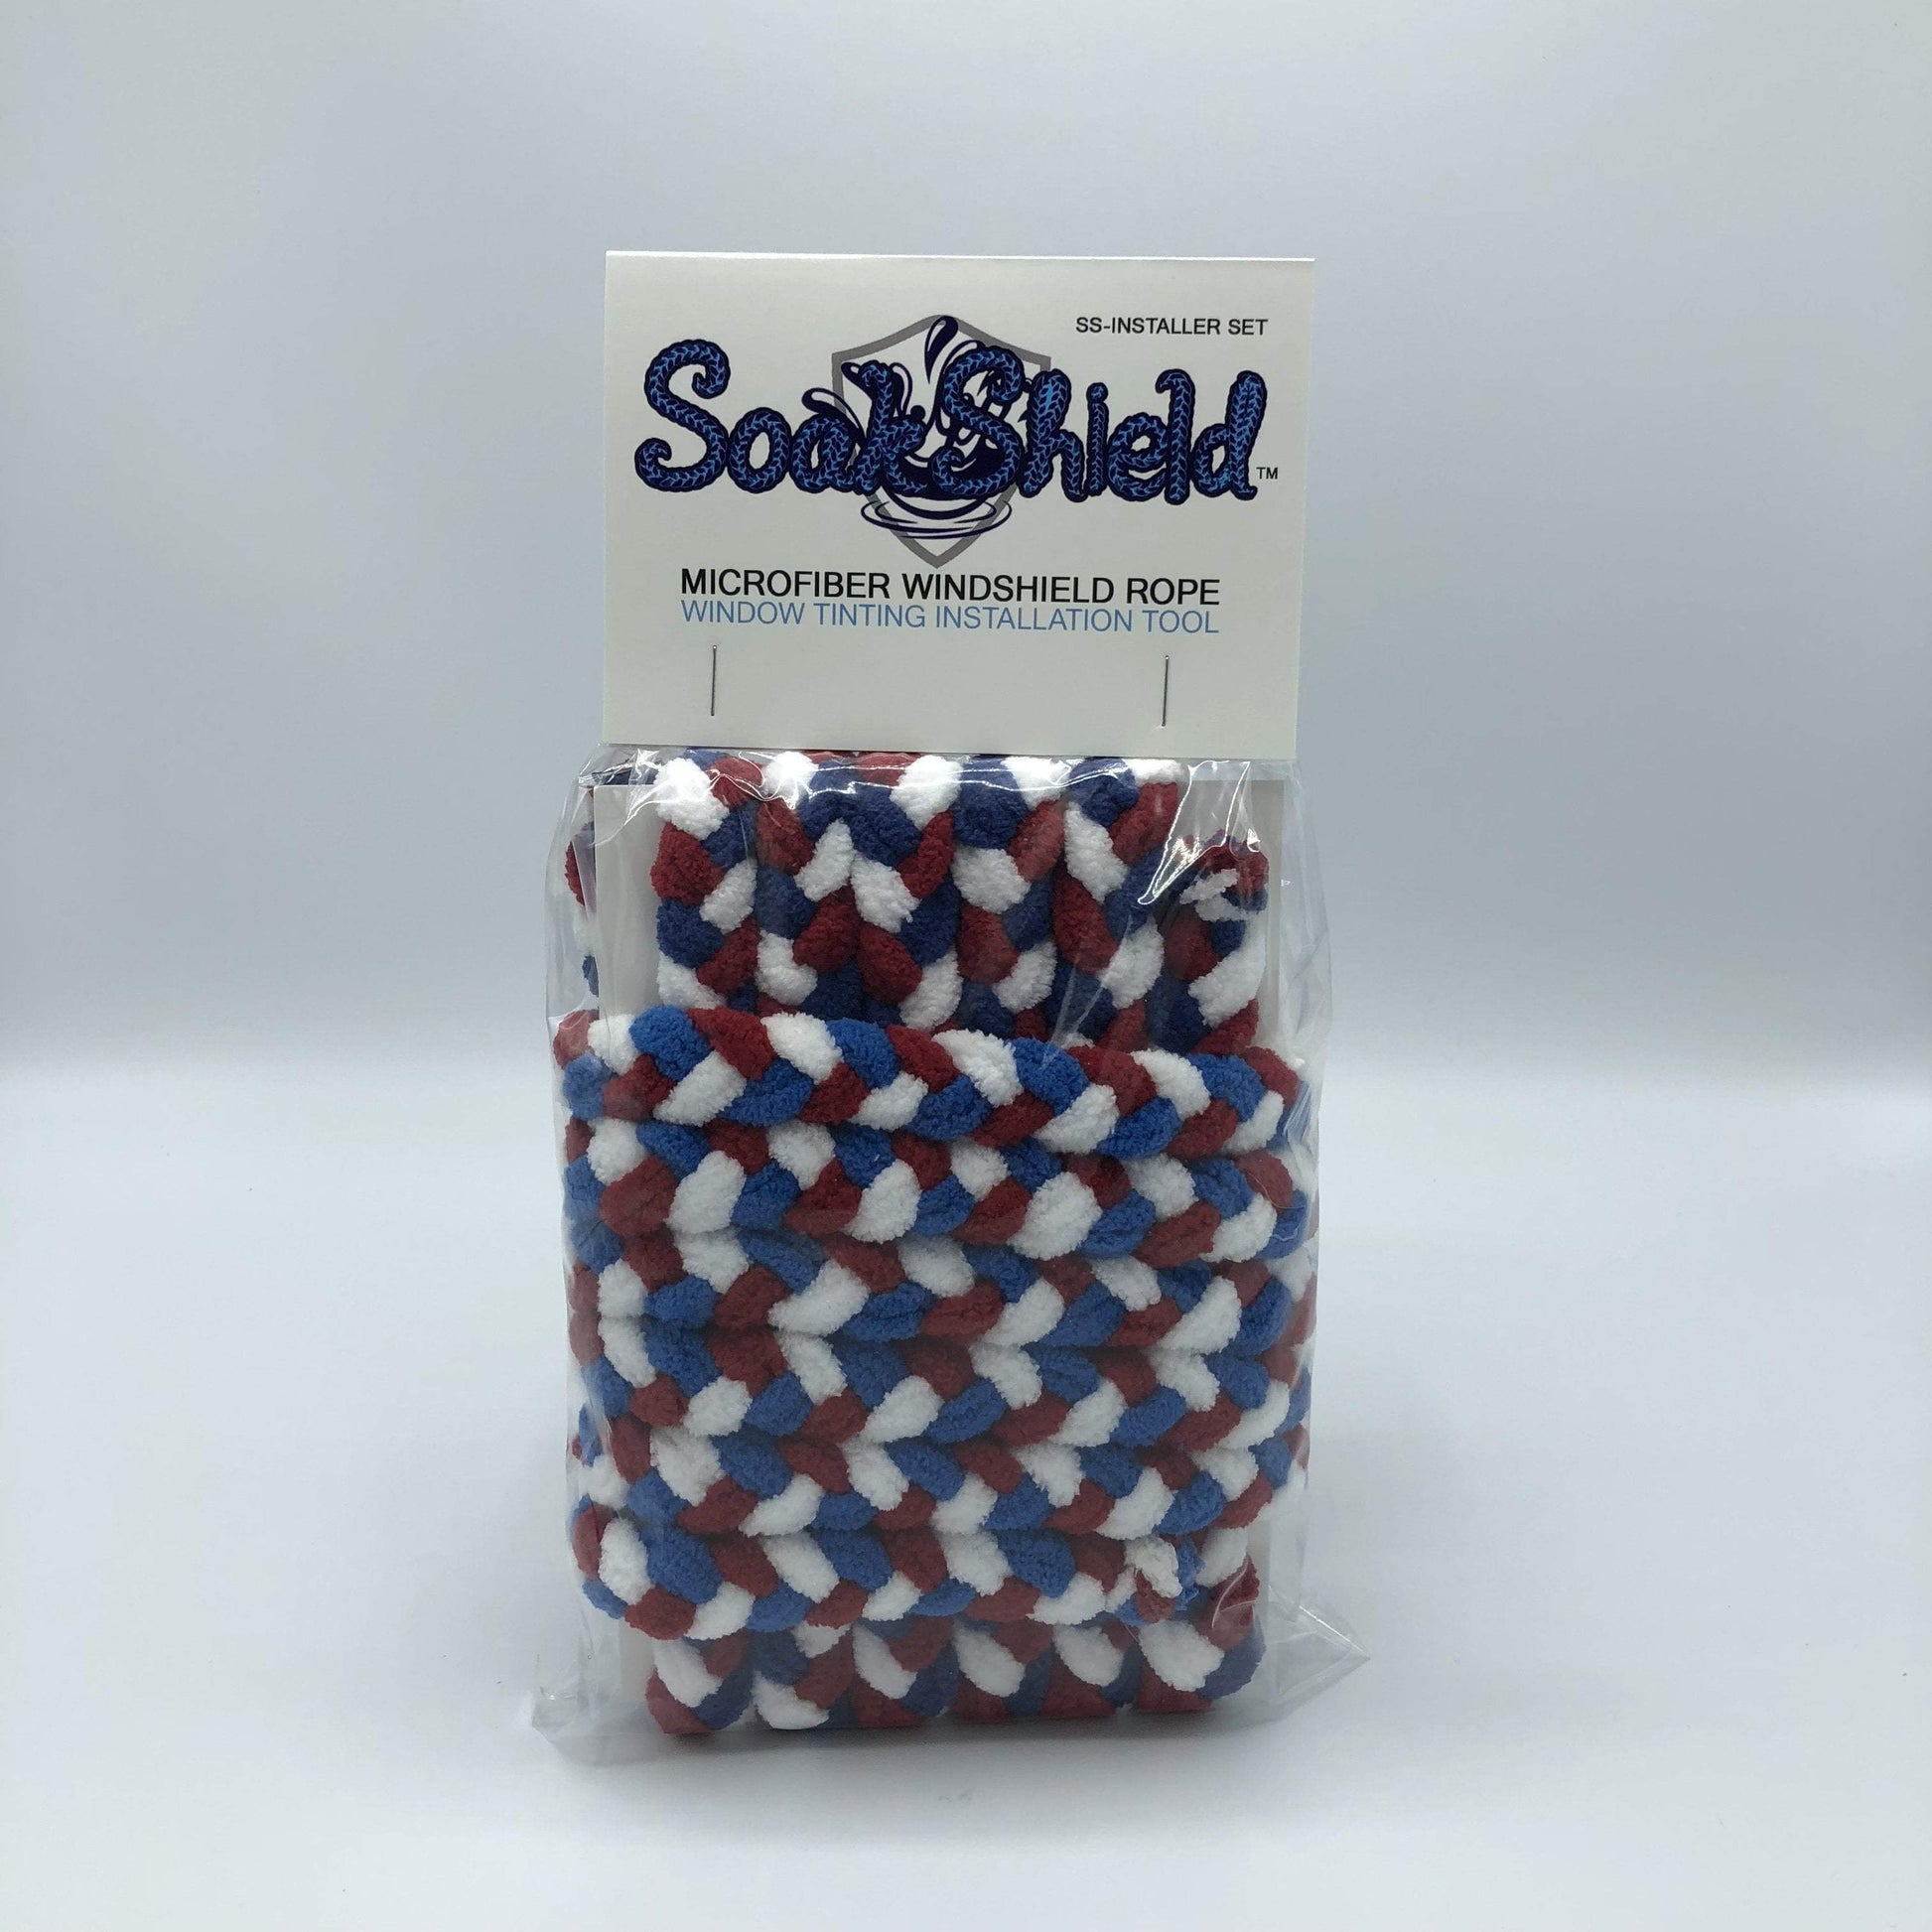 SoakShield Microfiber Rope Red/White/Blue SoakShield - Microfiber Windshield Installer 3pc Rope Set